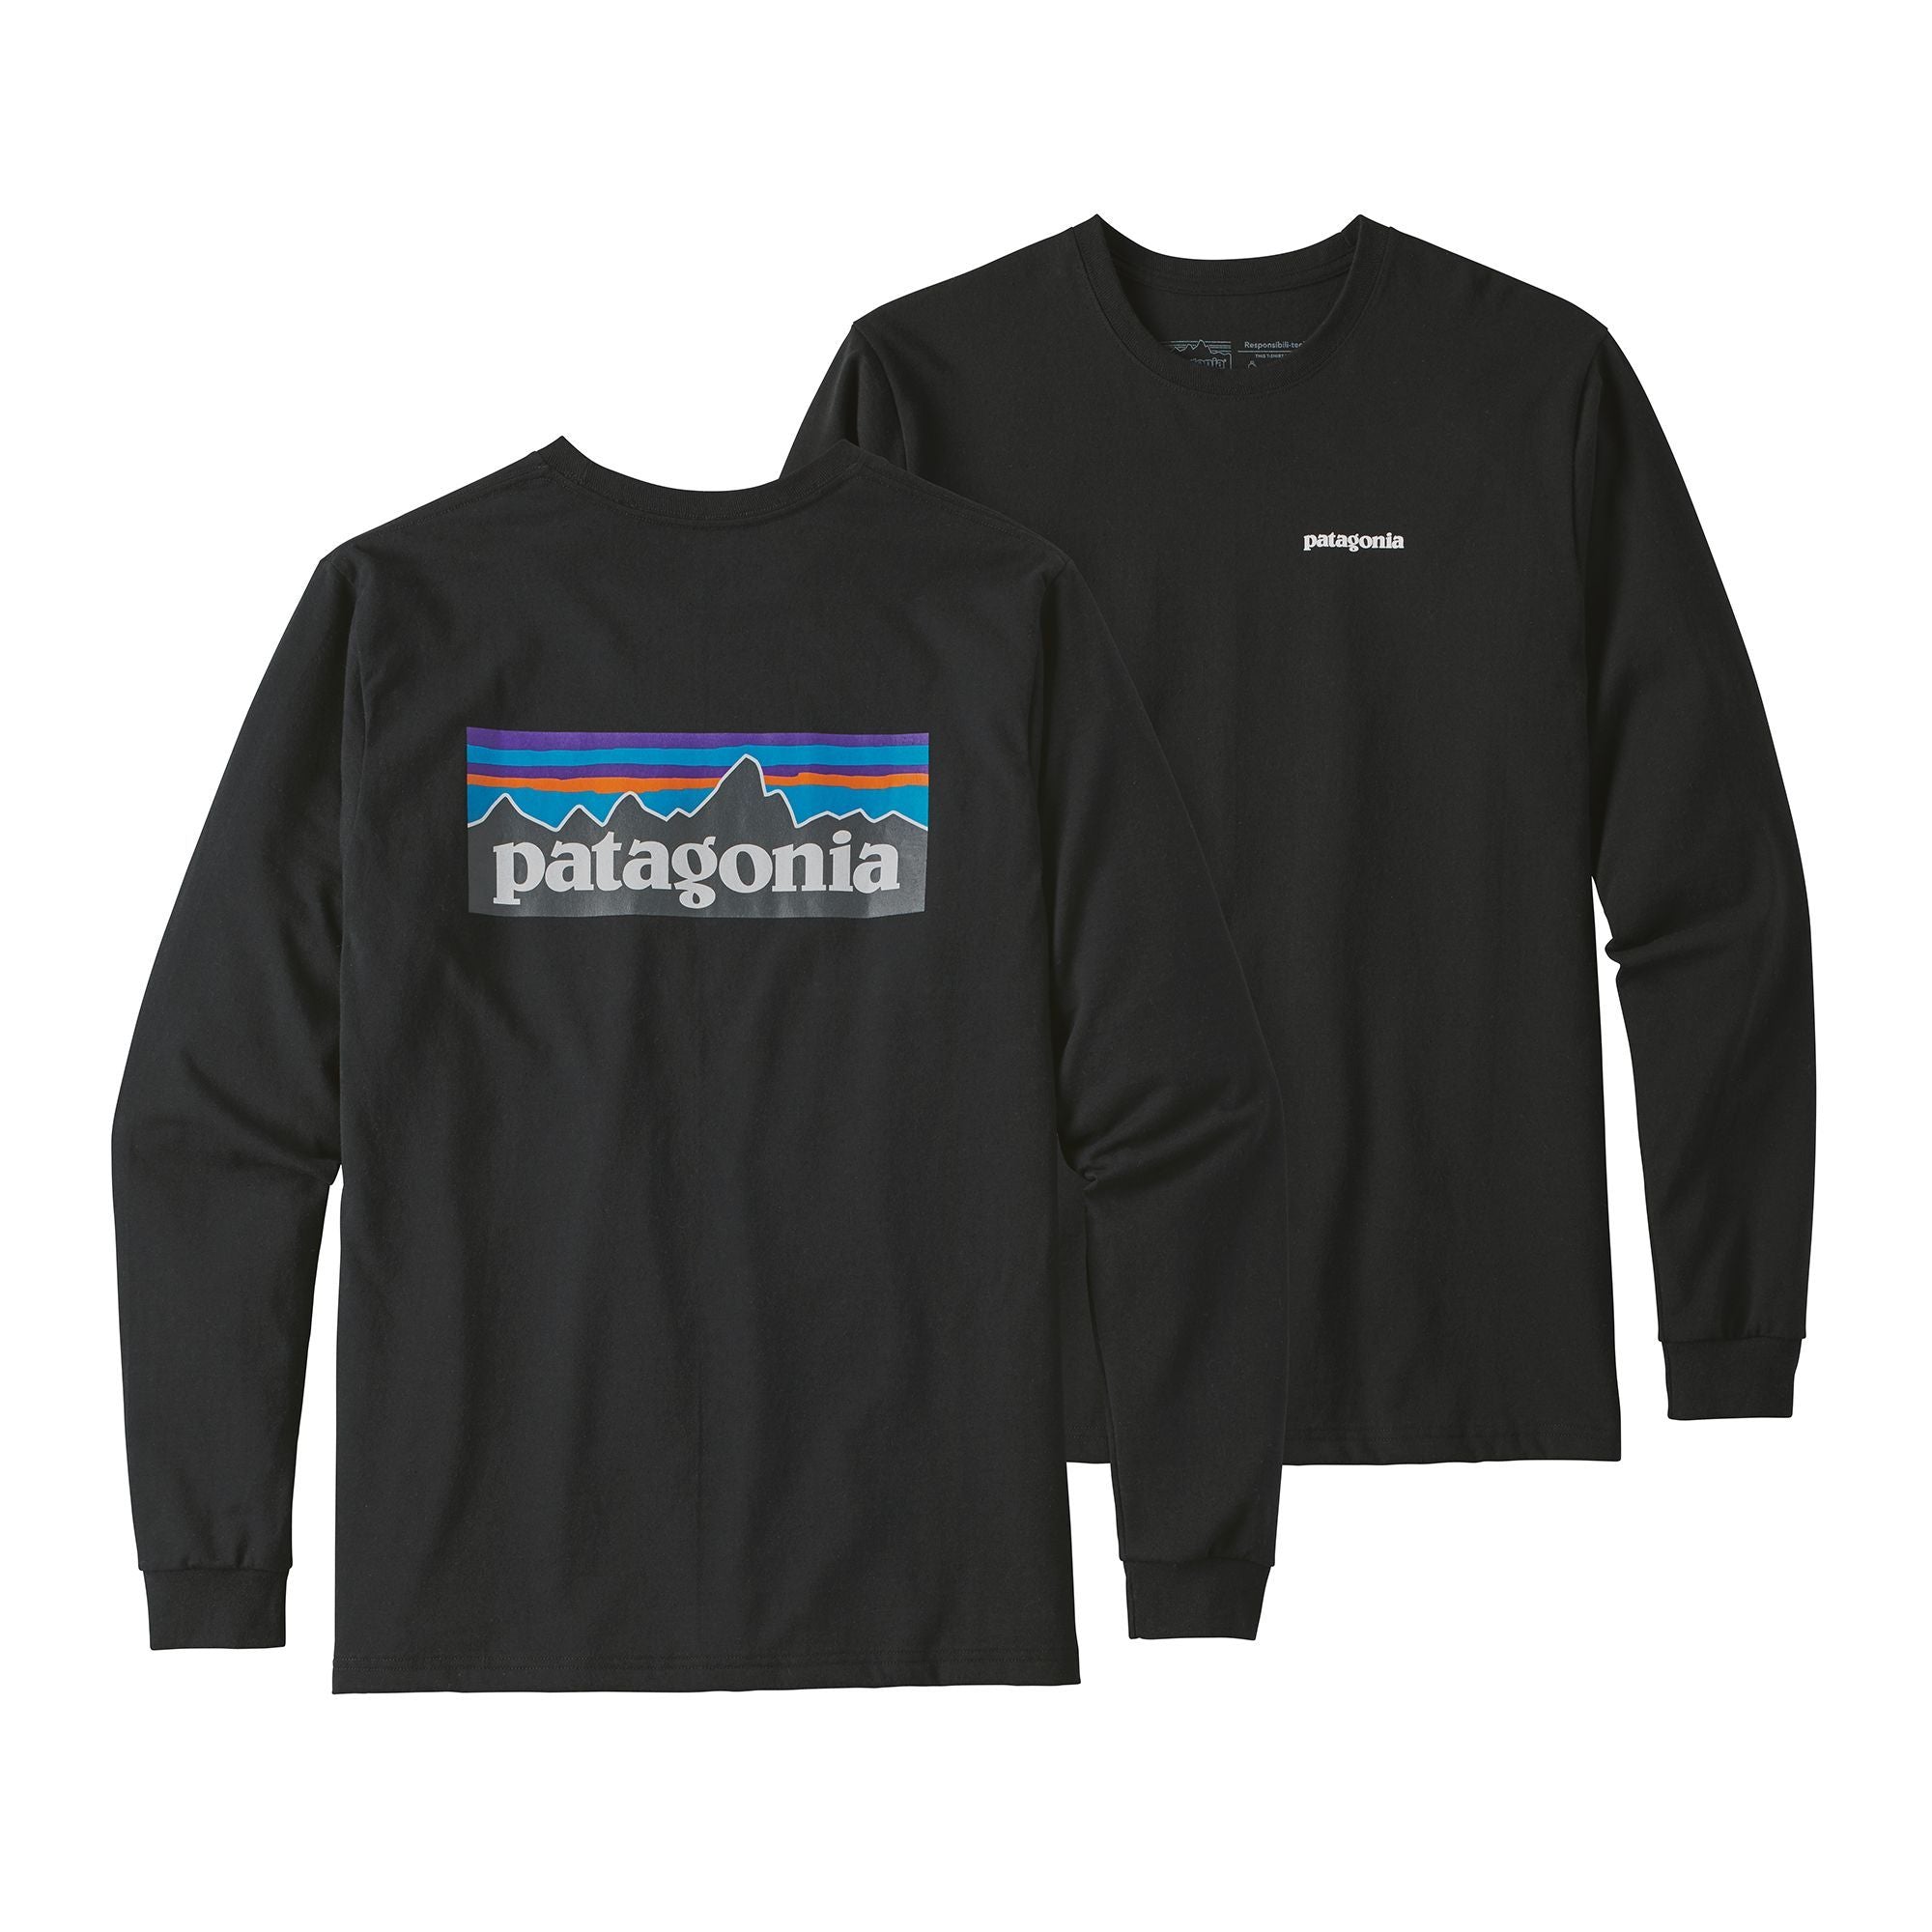 Patagonia block logo long sleeve tee black 